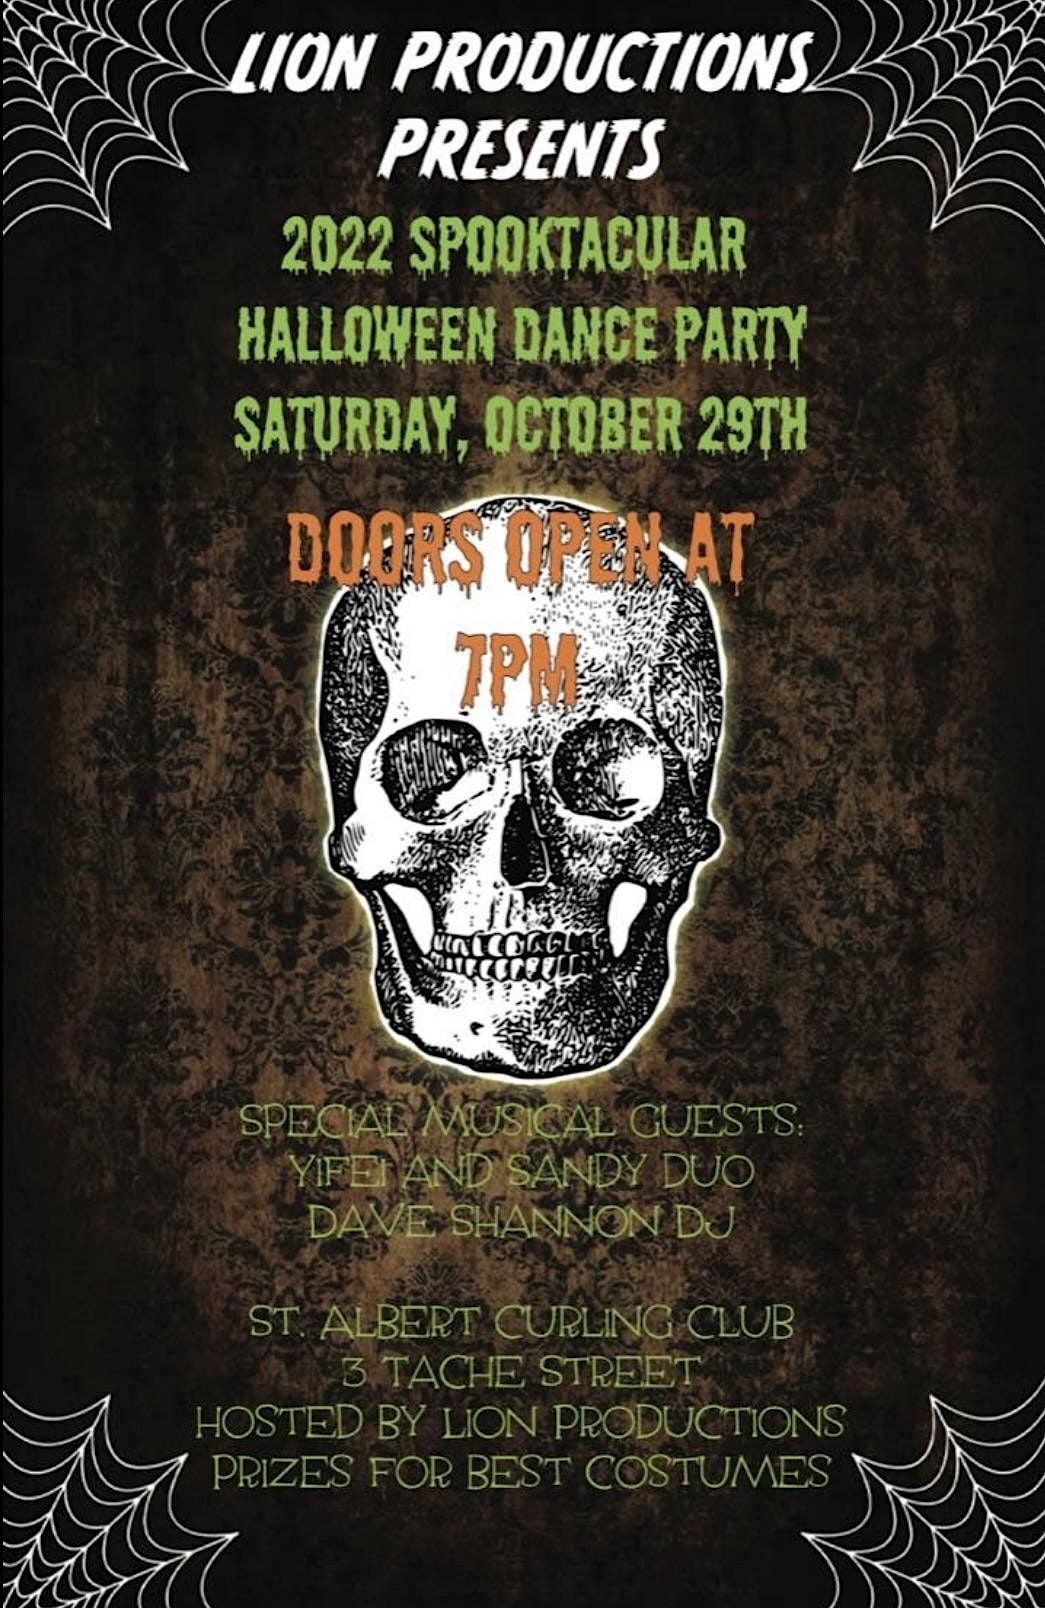 2022 Spooktacular Halloween Dance Party 3 Tache St St Albert Ab October 29 To October 30 1329